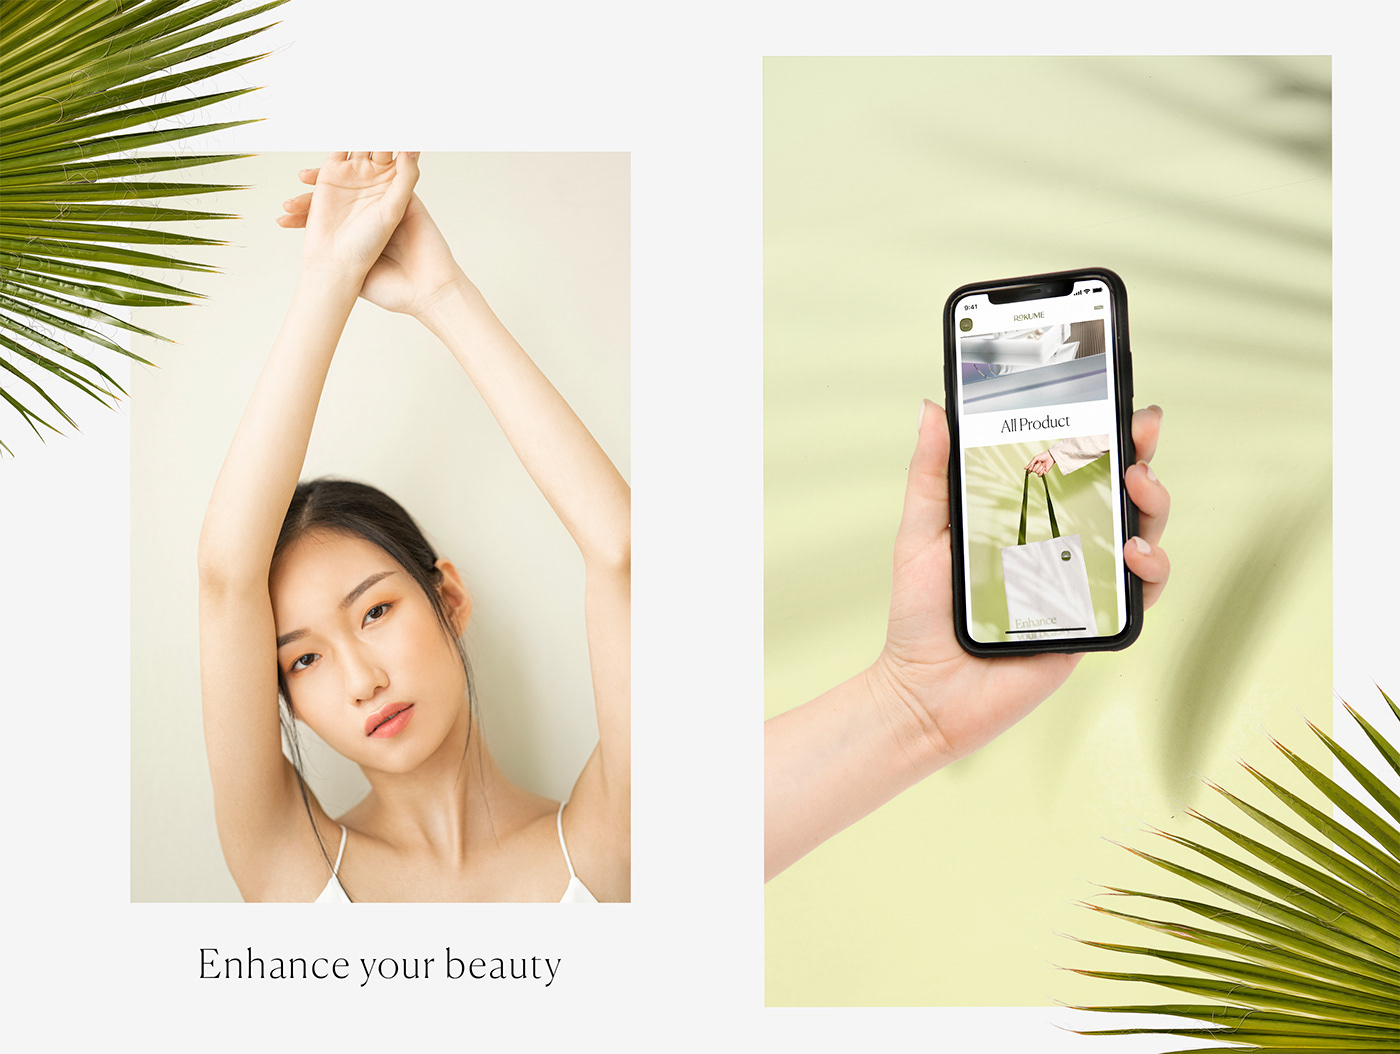 Cosmetic haphuong96 mondaycreative mondaystudio Packaging rokume vietnamdesigner vuphamdesigner